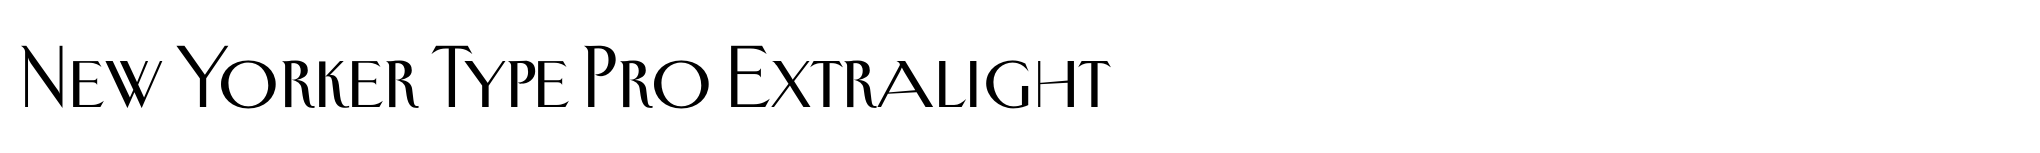 New Yorker Type Pro Extralight image